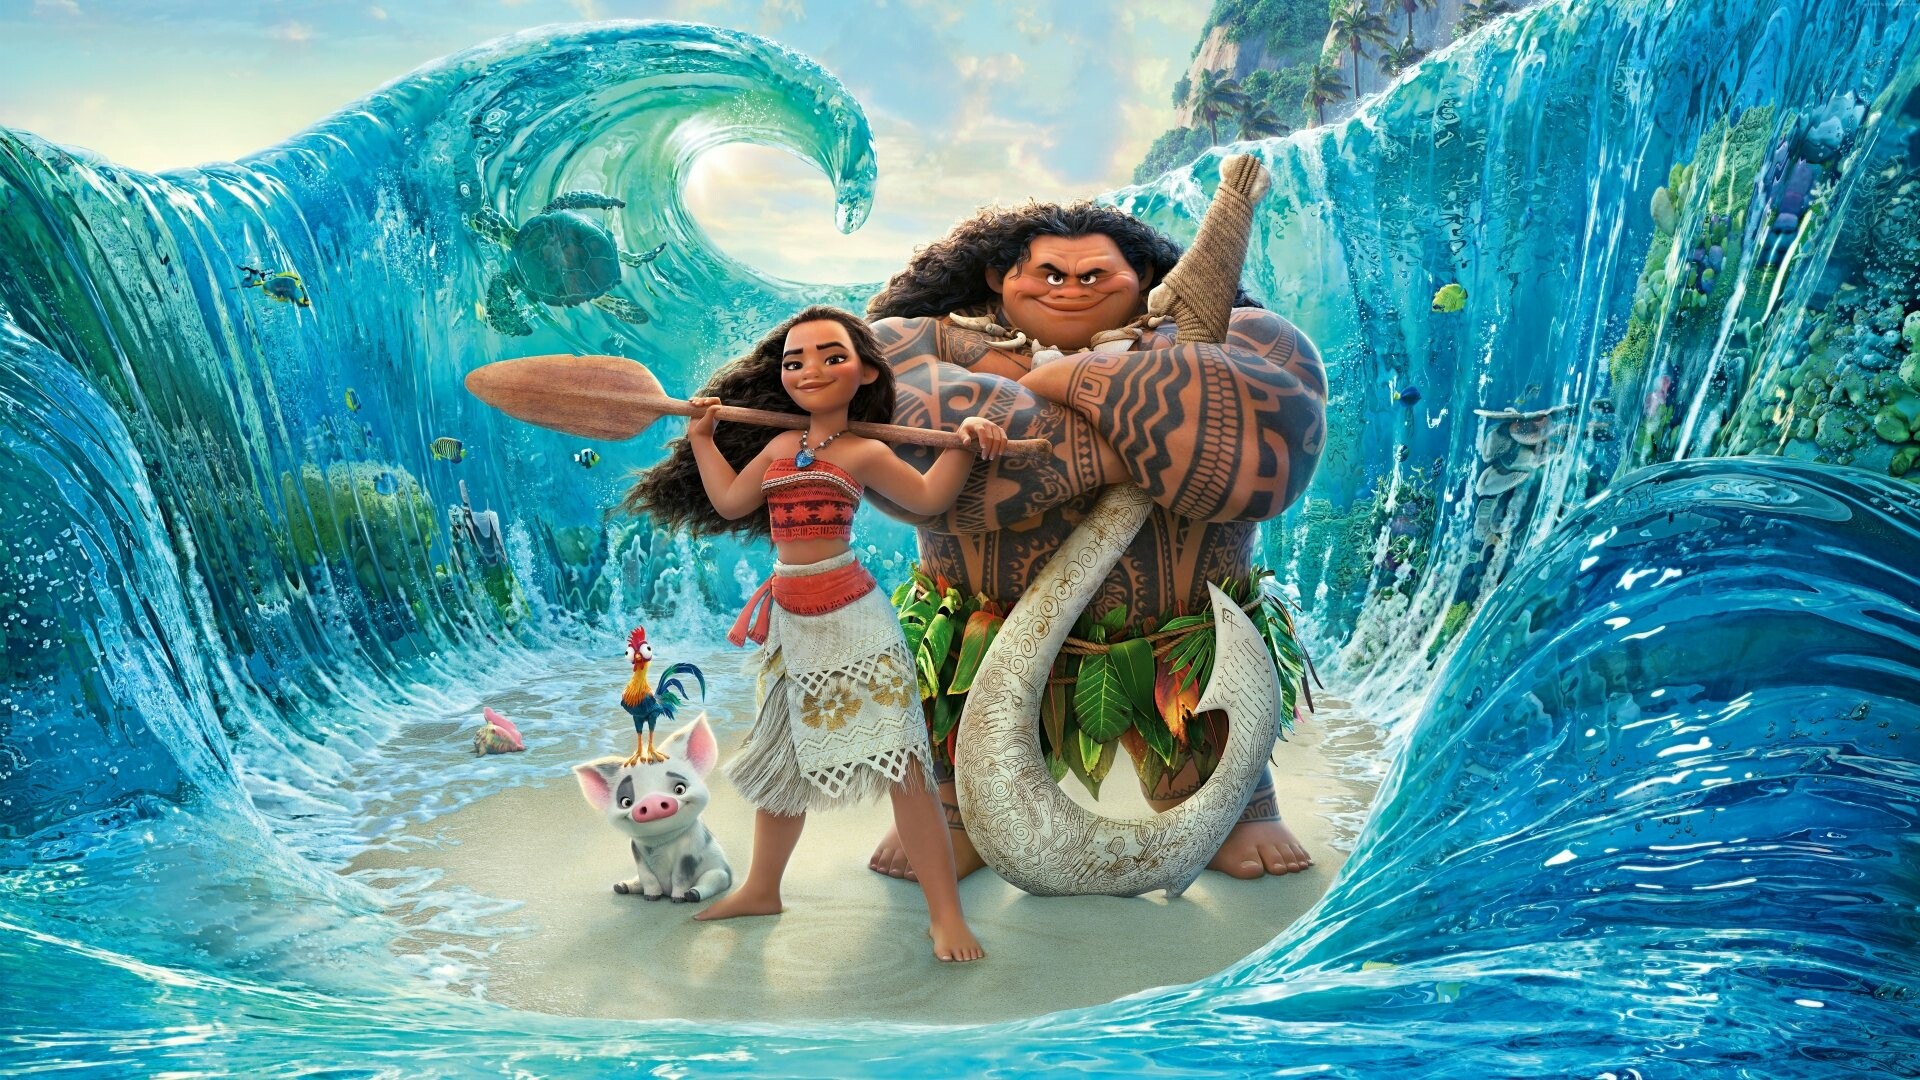 Moana: An animated Disney adventure about a Polynesian princess, Maui. 1920x1080 Full HD Background.